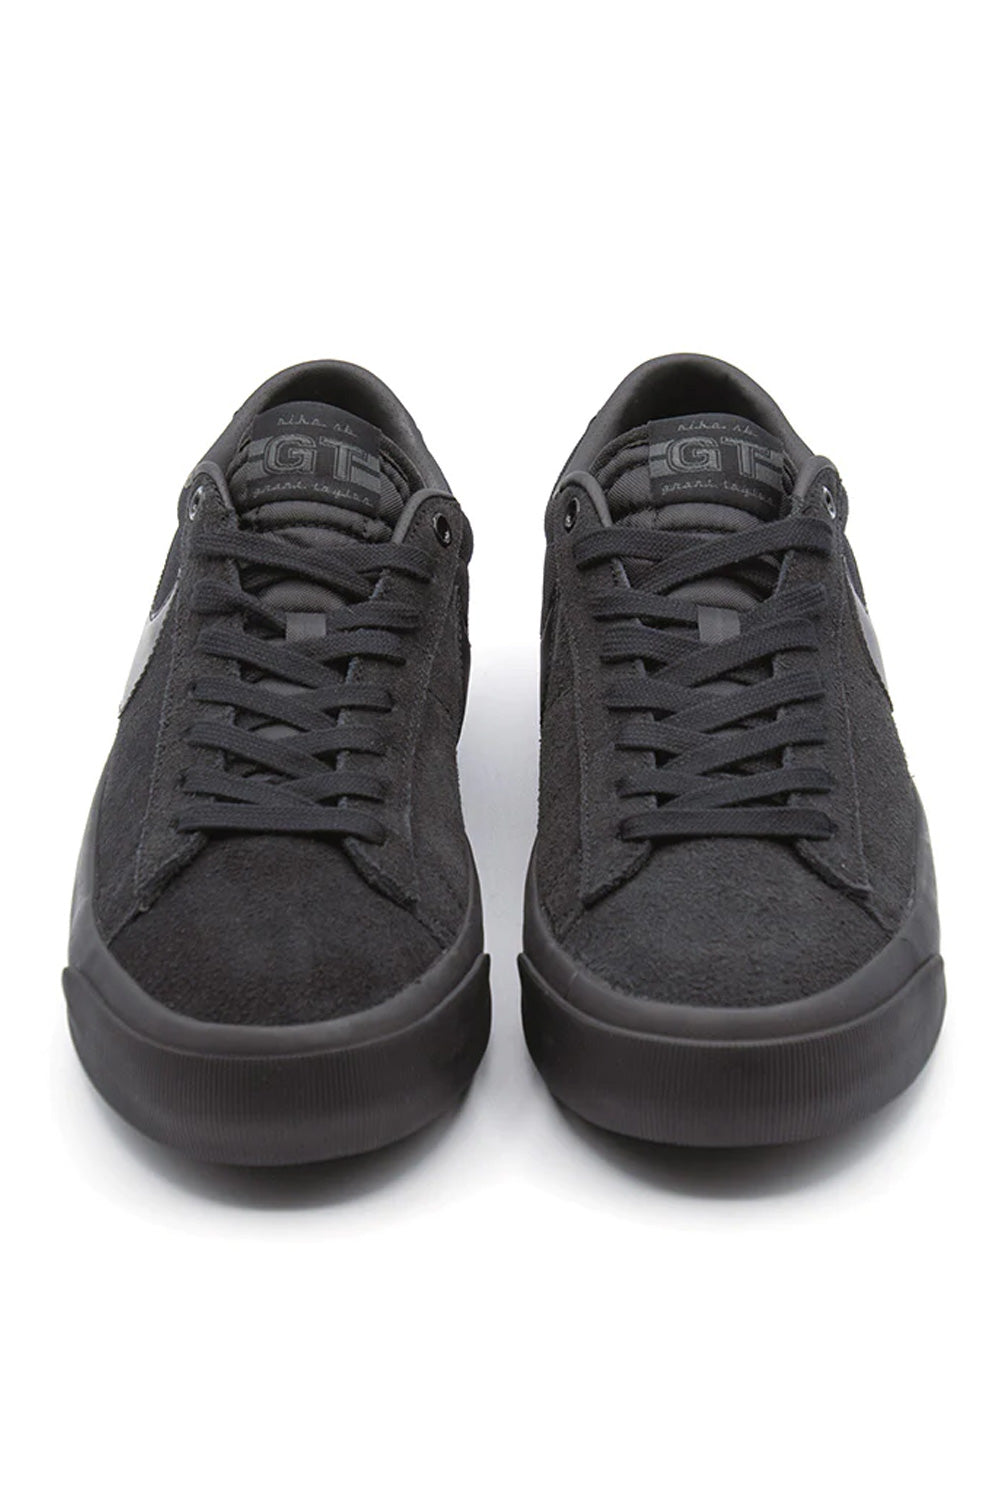 Nike SB Zoom Blazer Low Pro GT Shoe Black / Black / Black / Anthracite - BONKERS